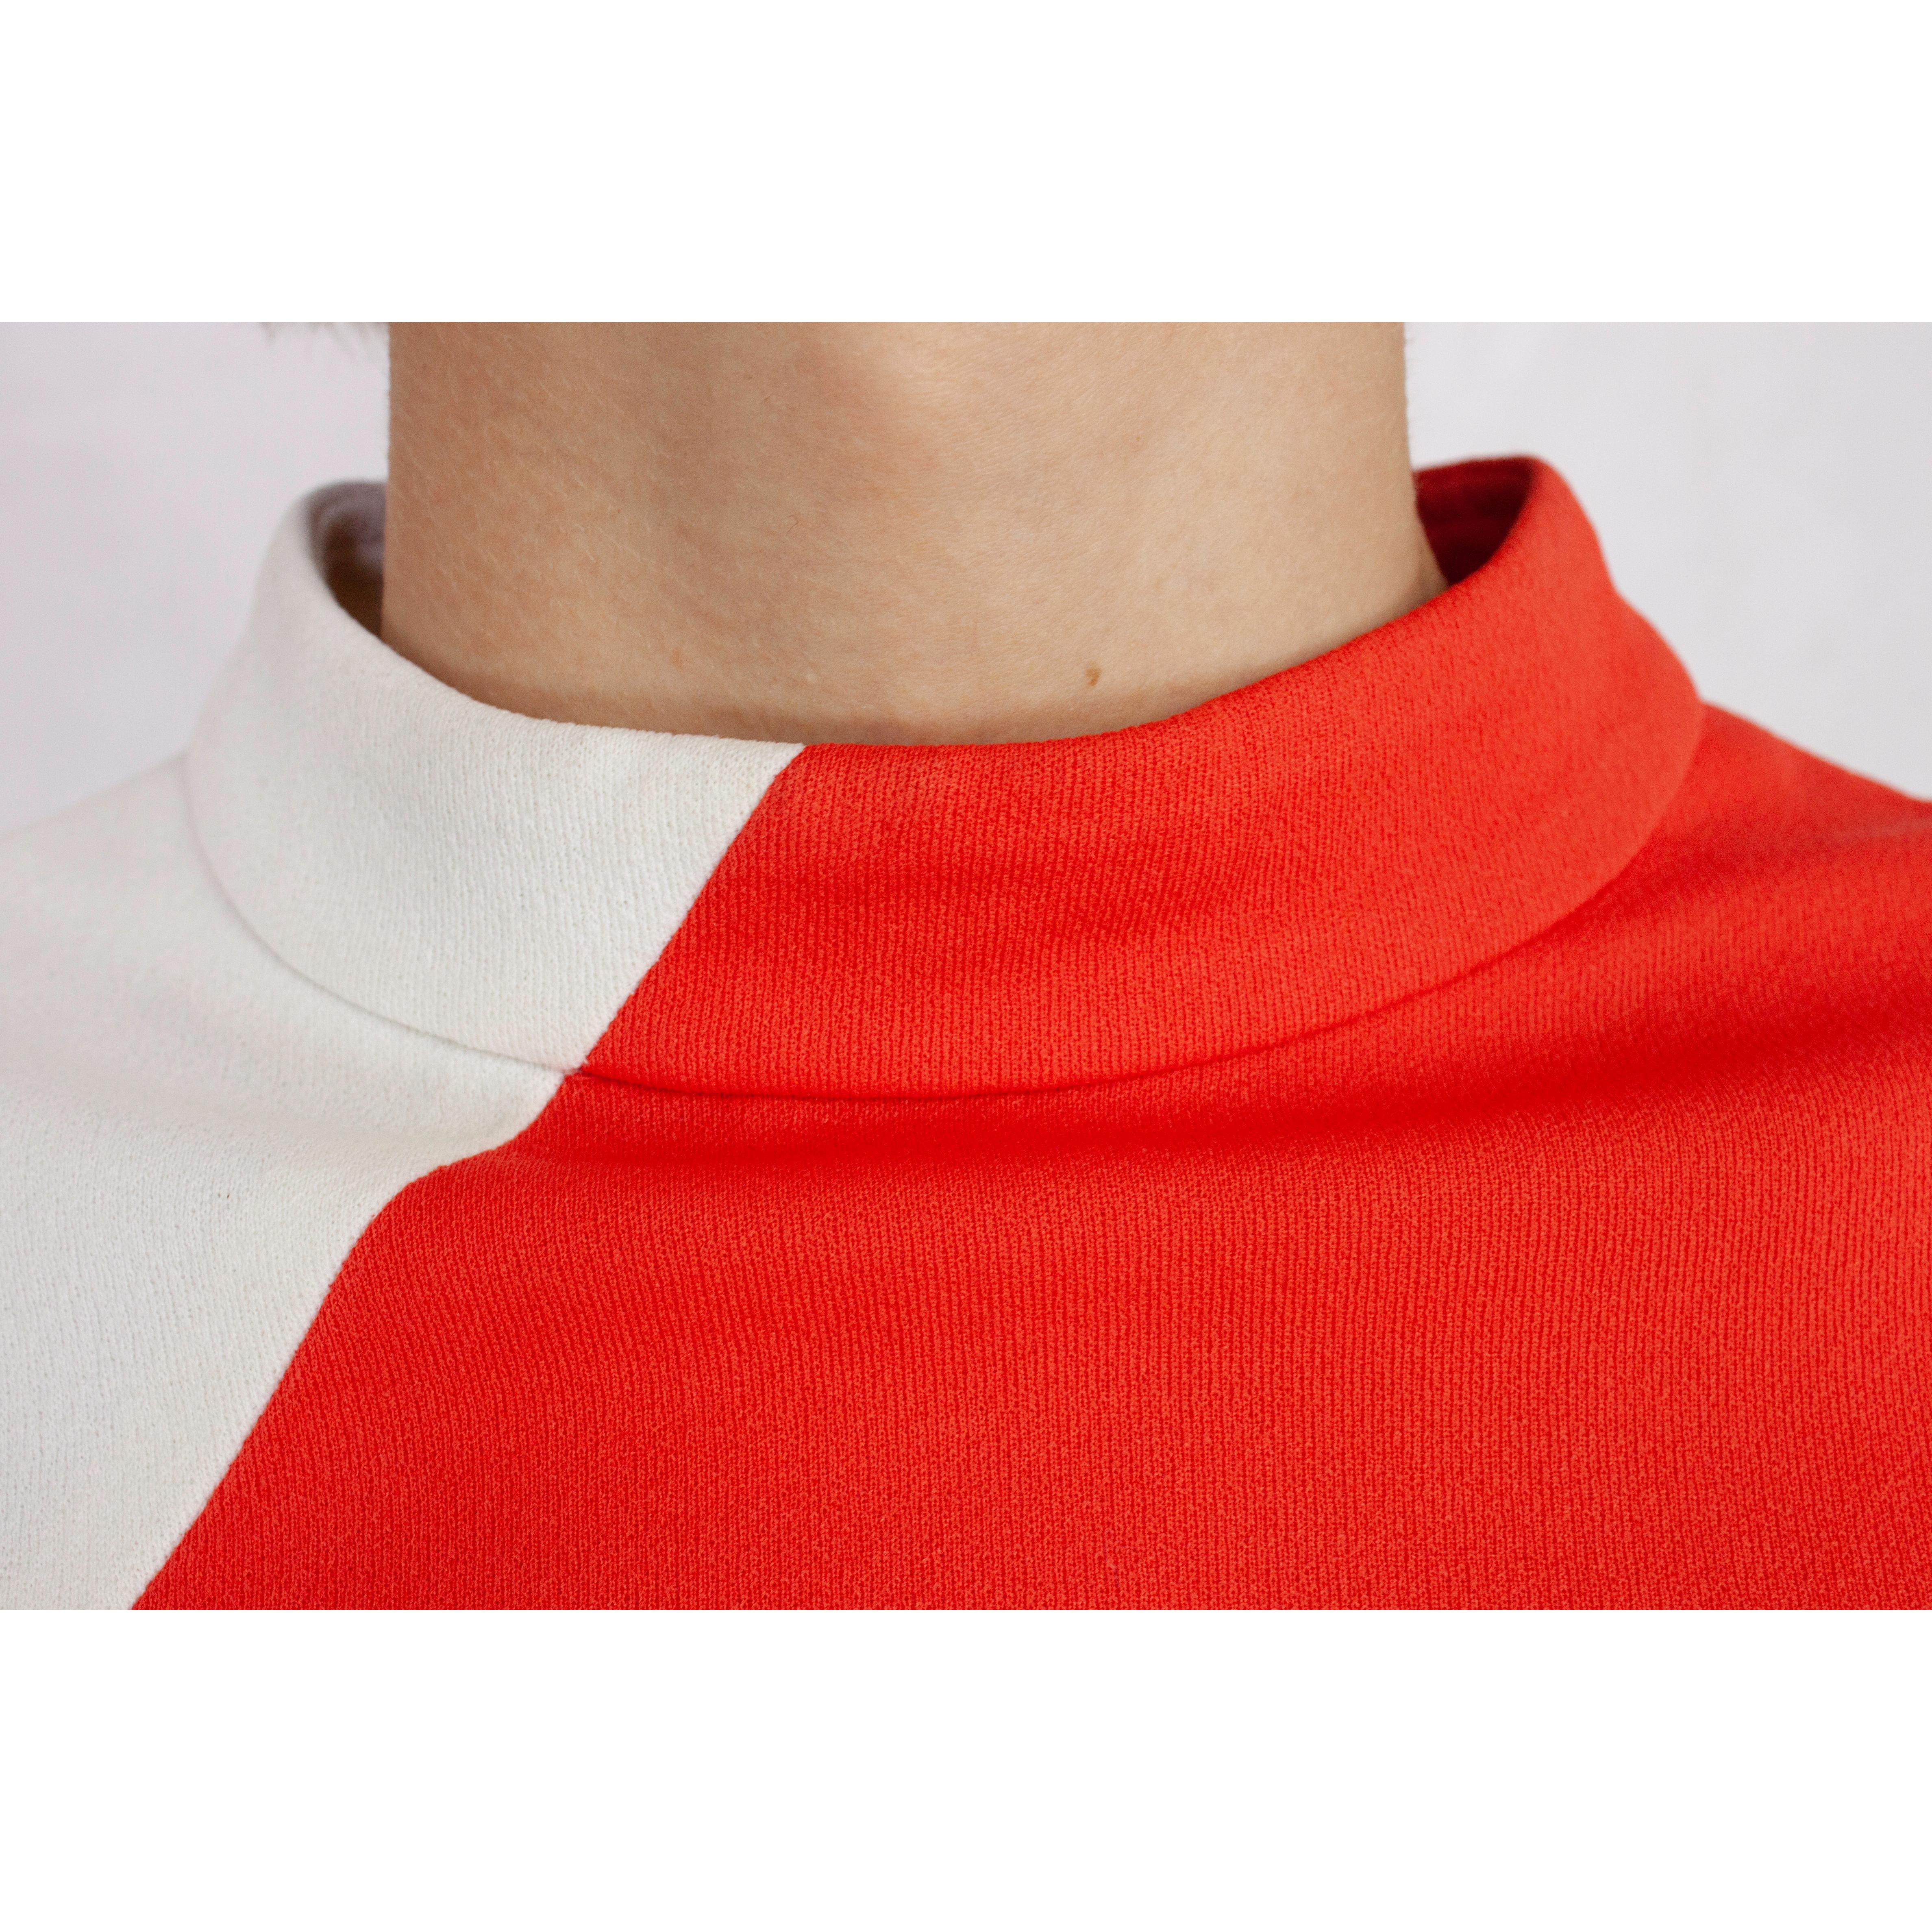 Pierre Cardin colour-block jersey dress. circa 1960s 1